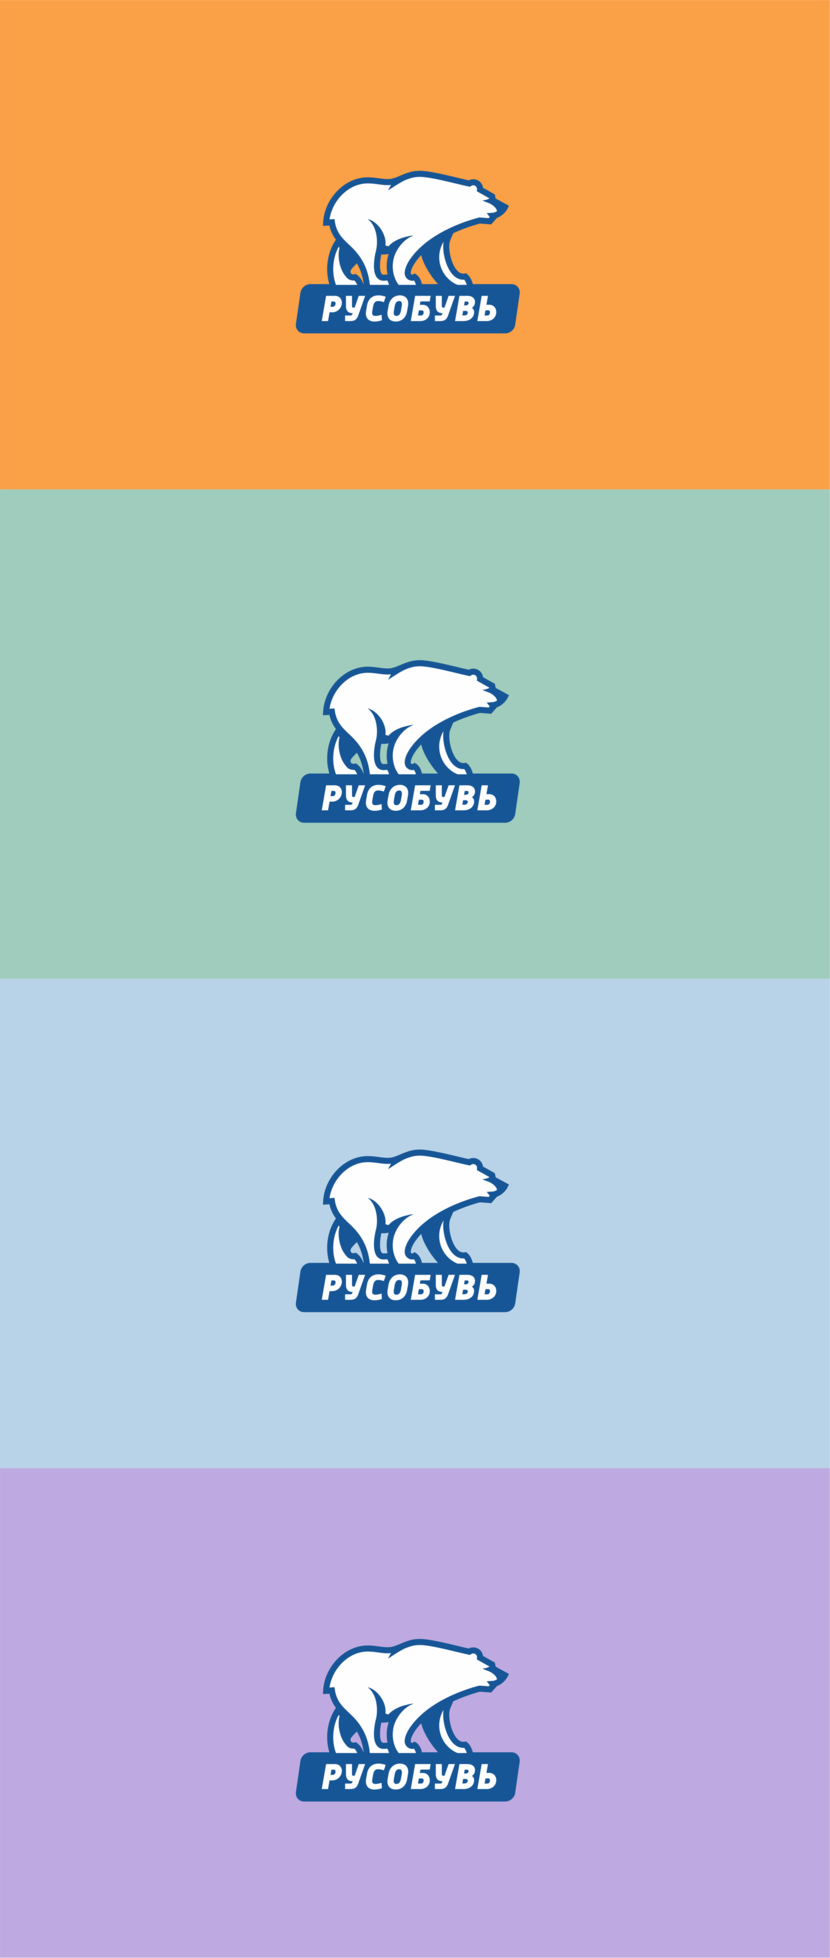 Синий контур на любом фоне - Разработка логотипа обувной фабрики